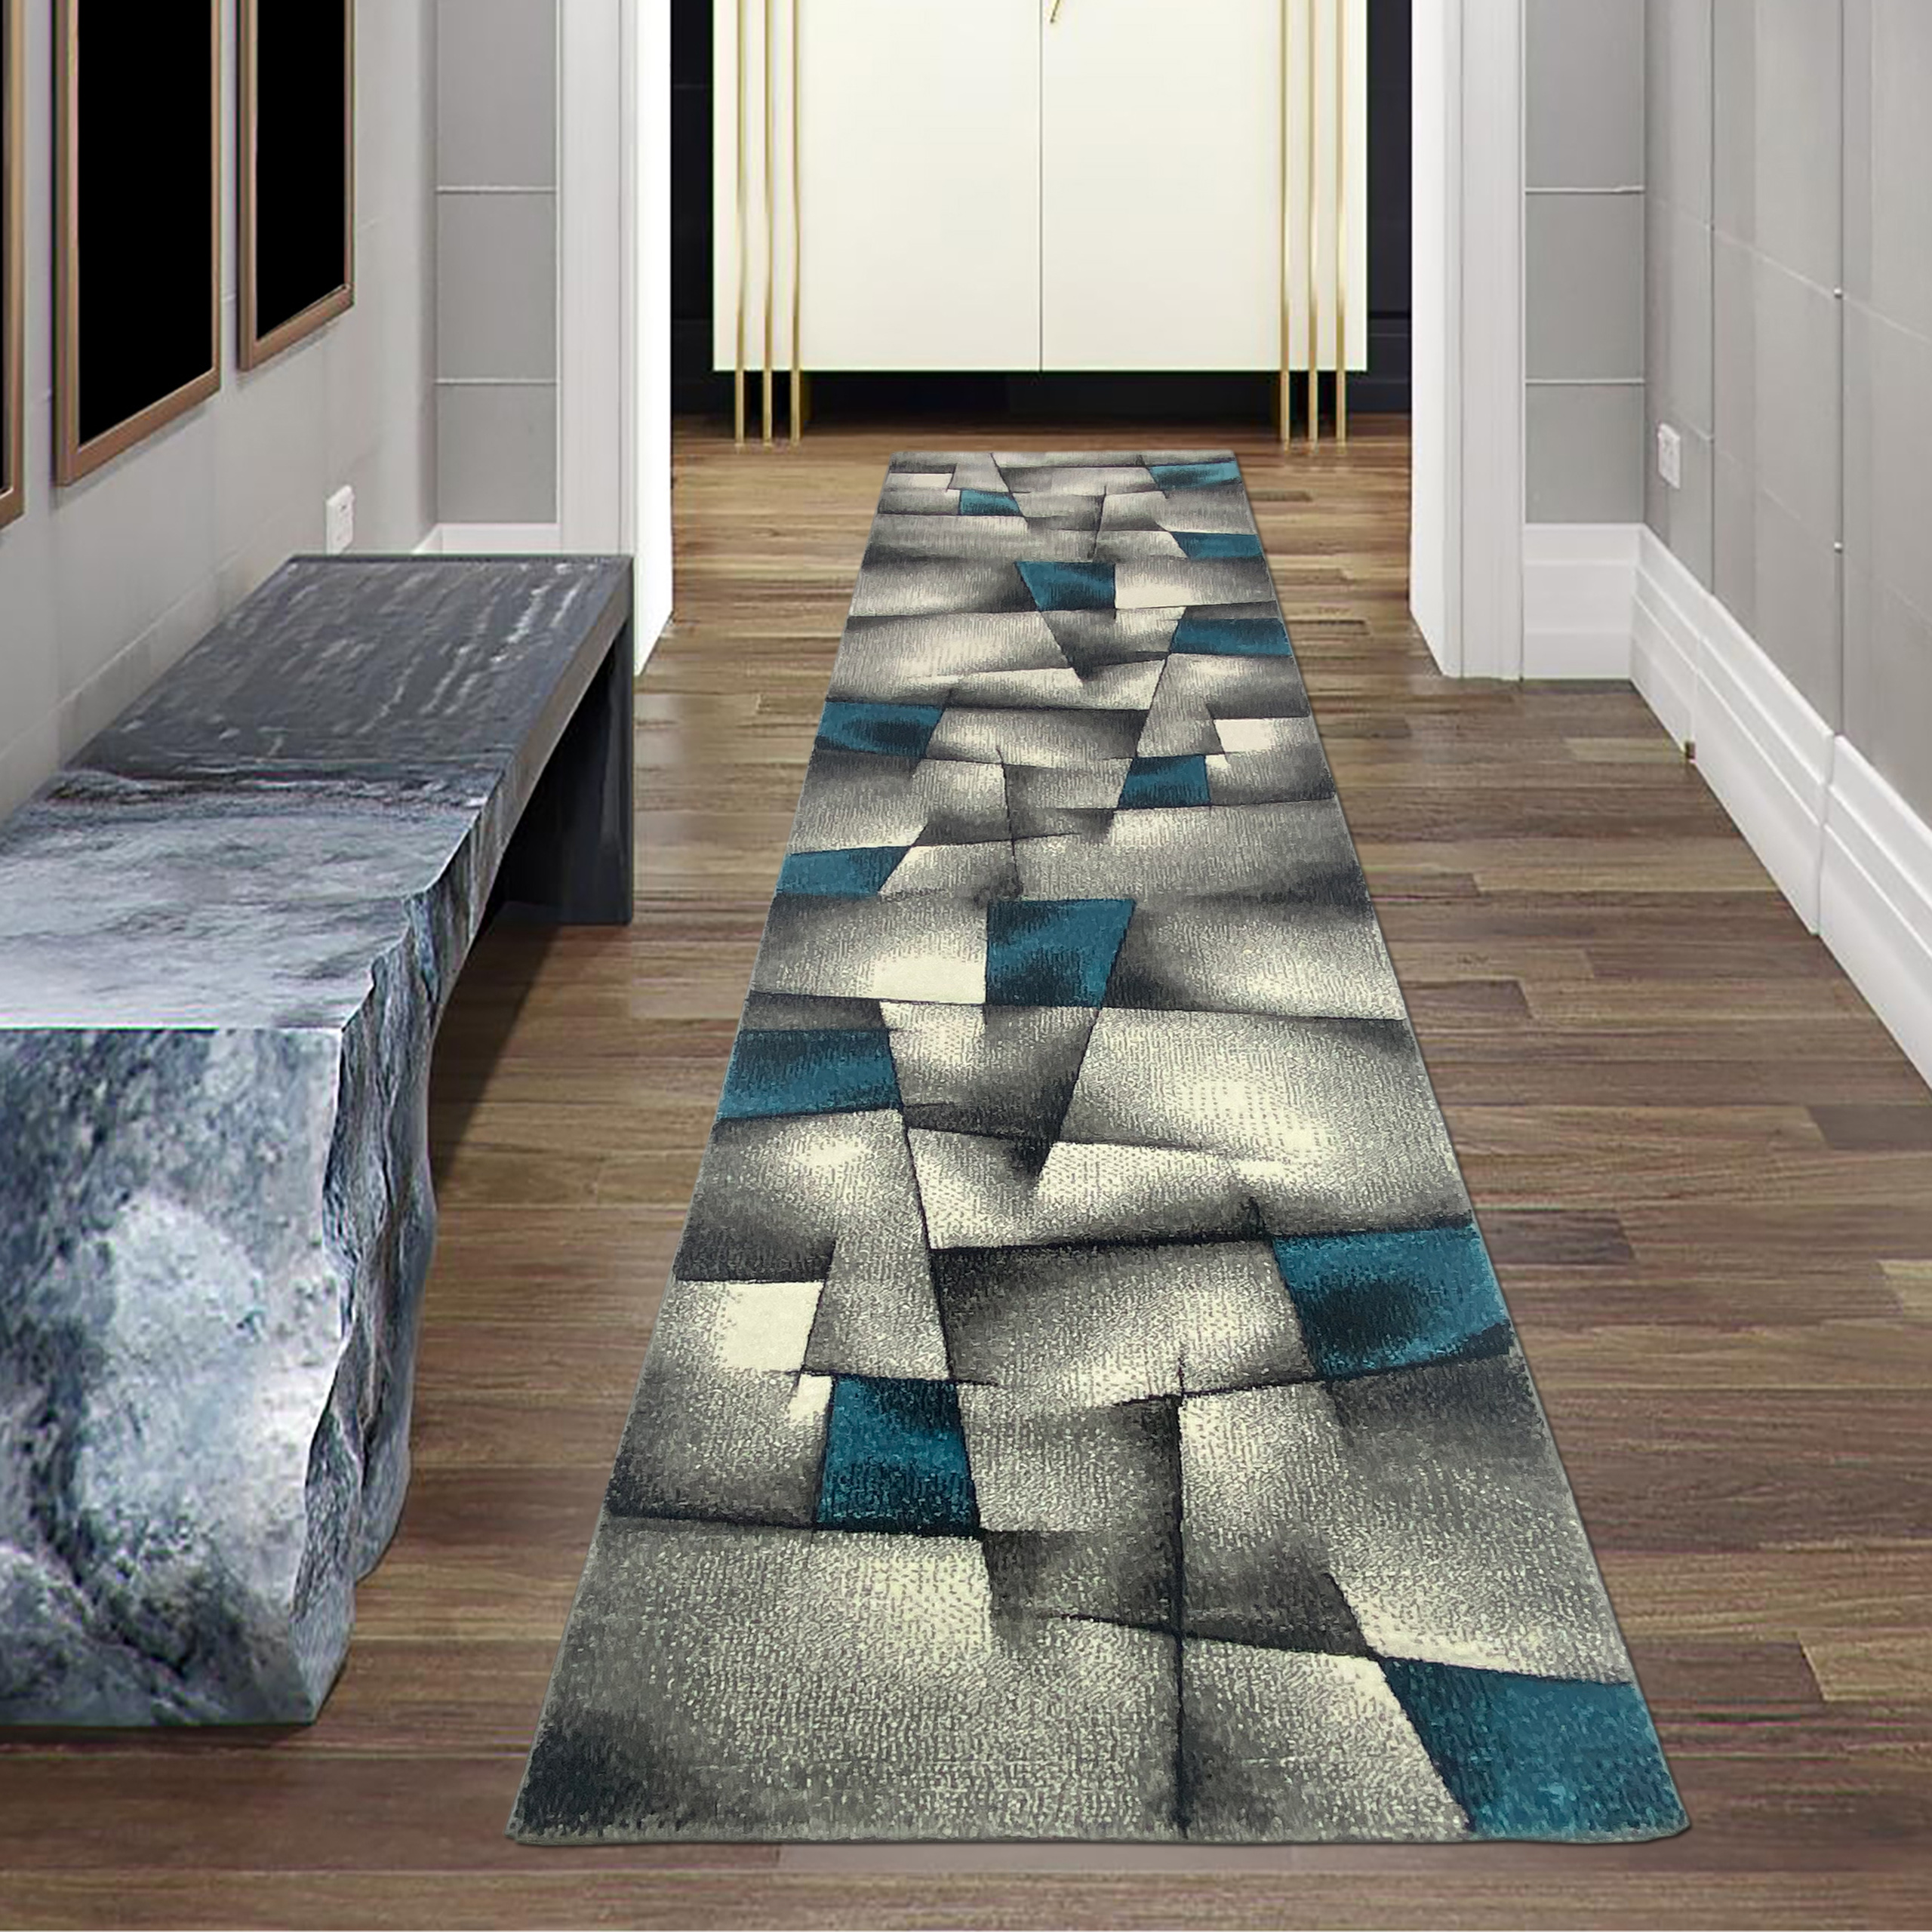 Modern & -Traum - High-quality and designer carpet Teppich dreams cheap at carpets